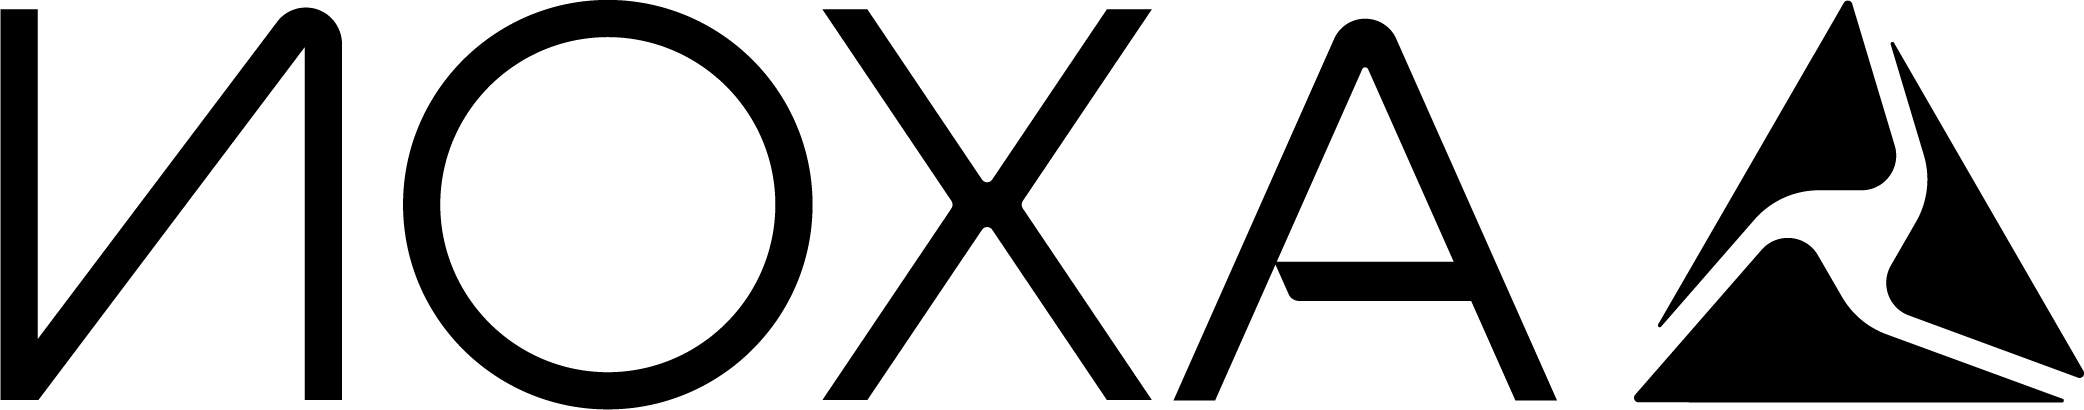 Axon logo